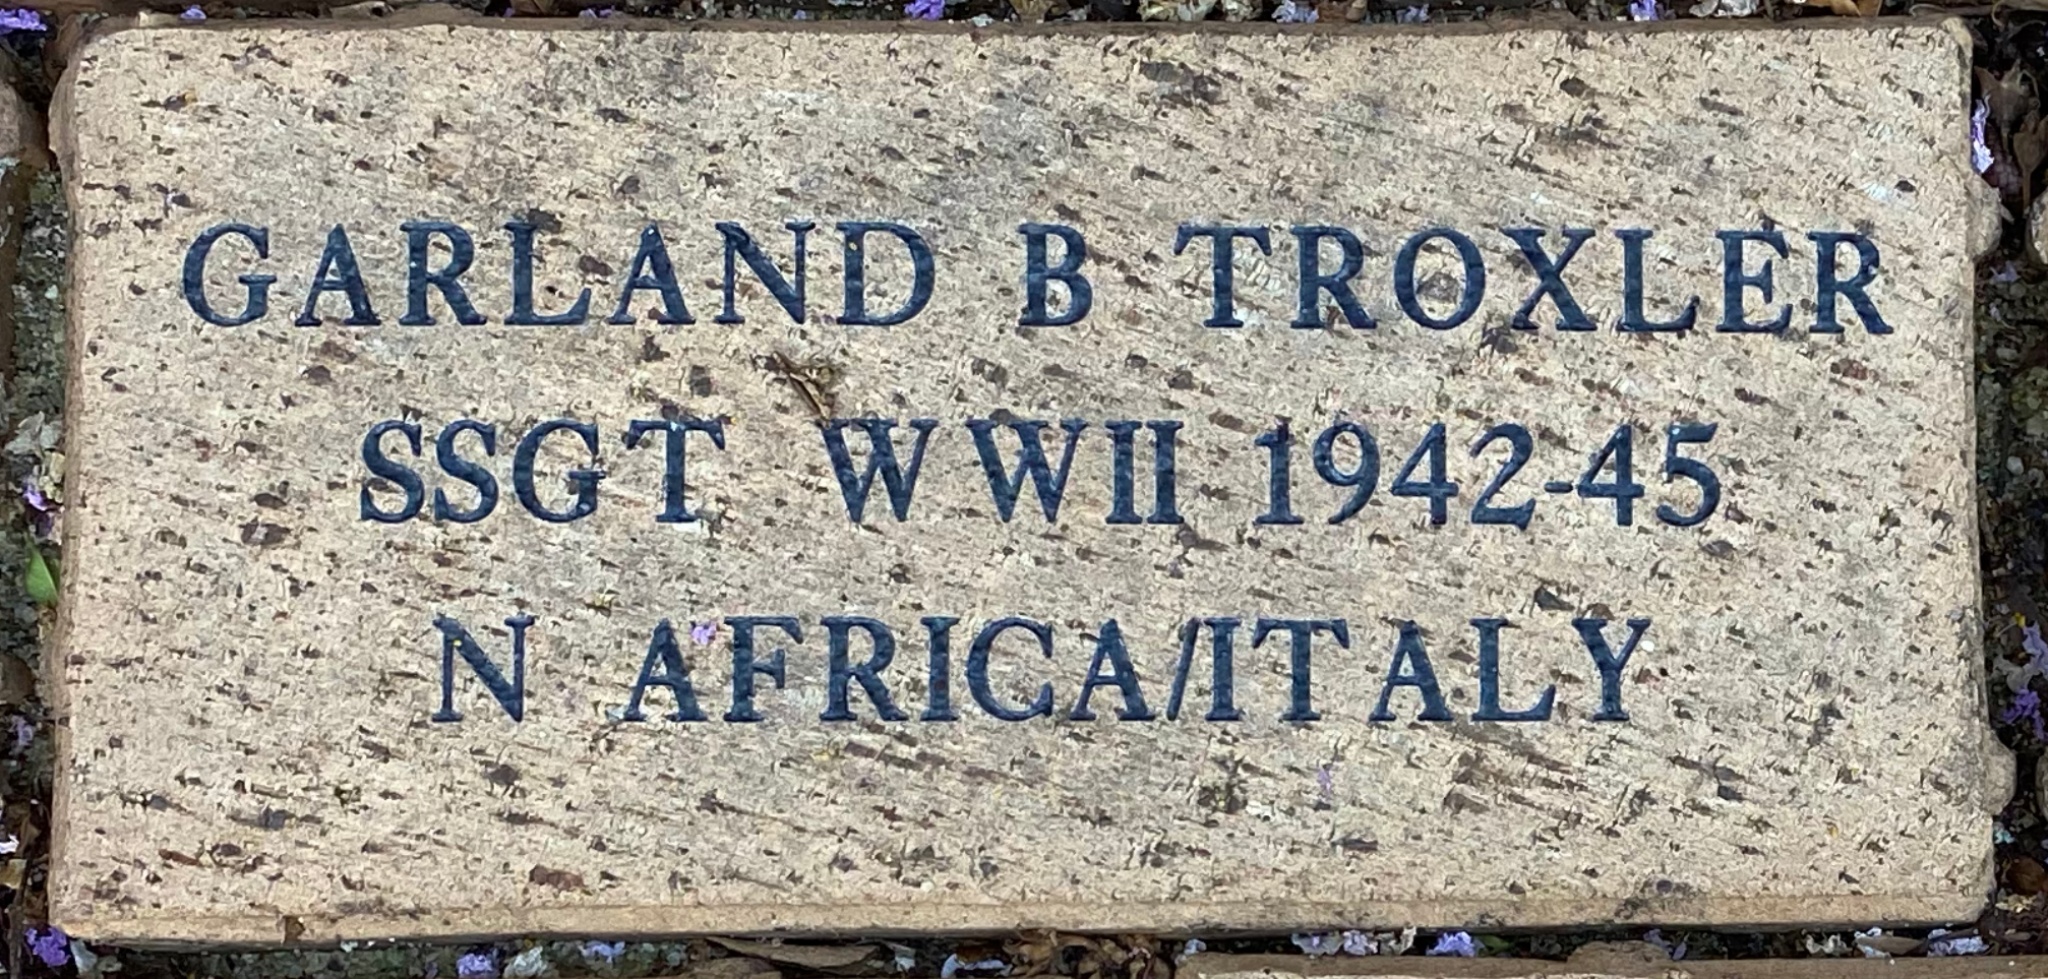 GARLAND B TROXLER SSGT WWII 1942-1945 N AFRICA/ITALY